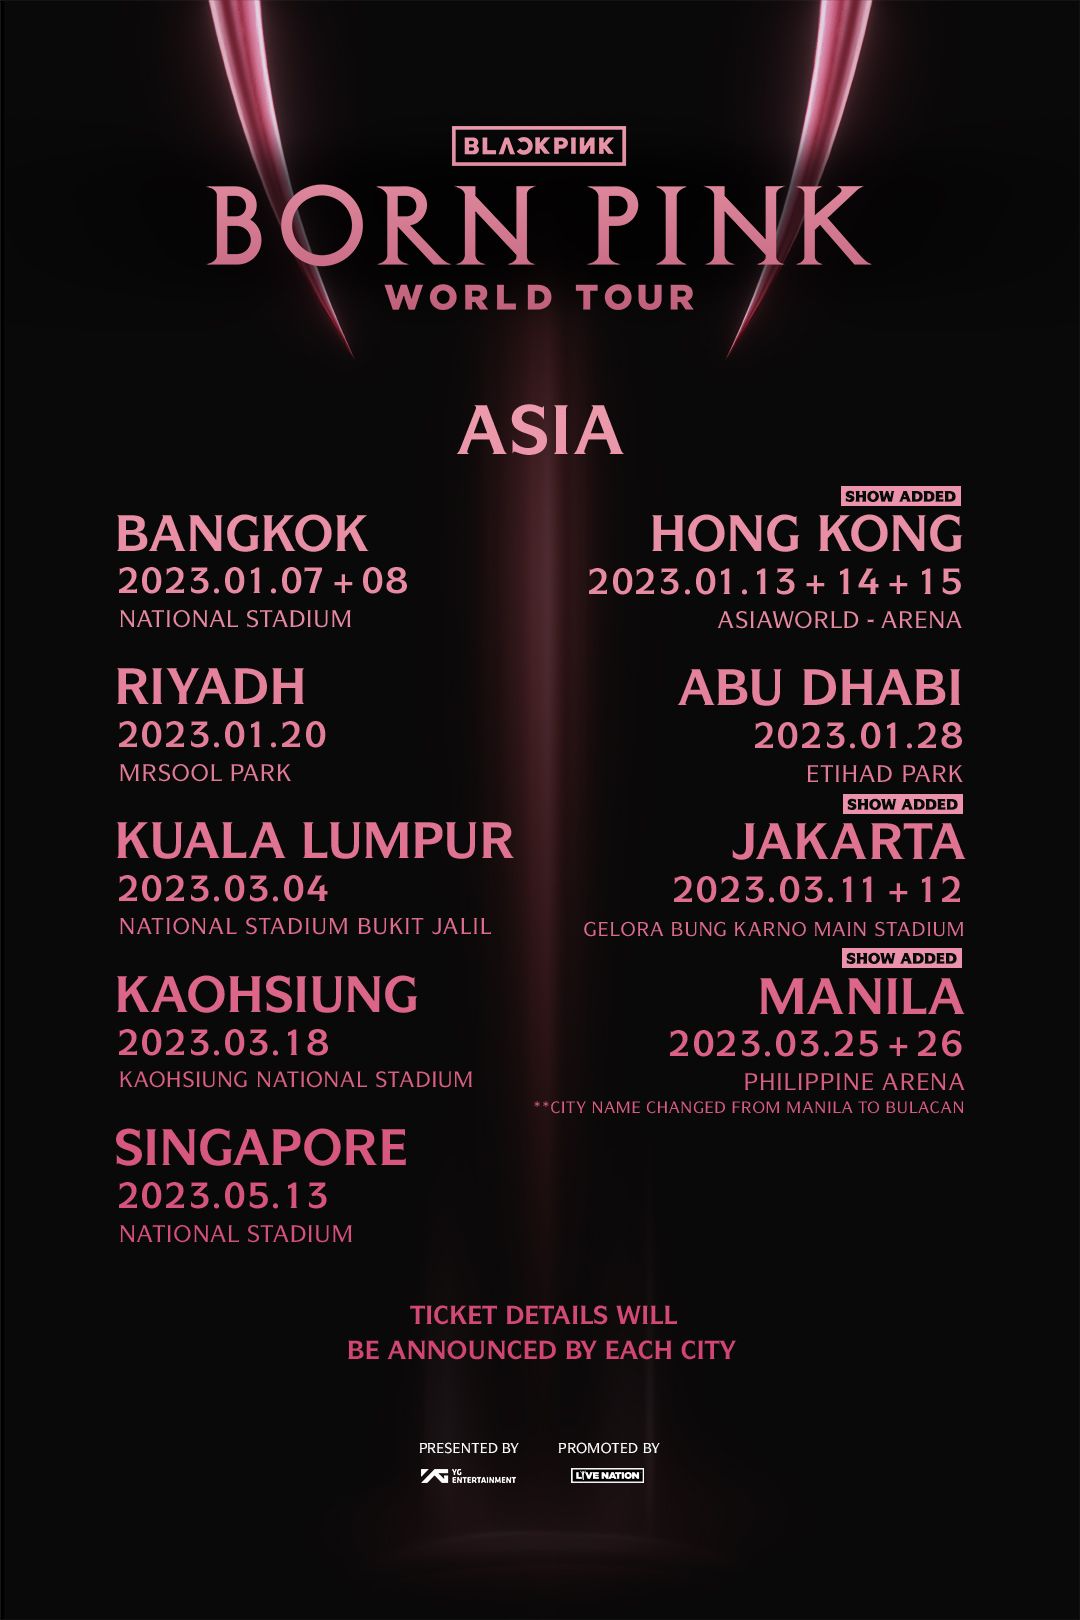 Jadwal dan lokasi BORN PINK World Tour di wilayah Asia.